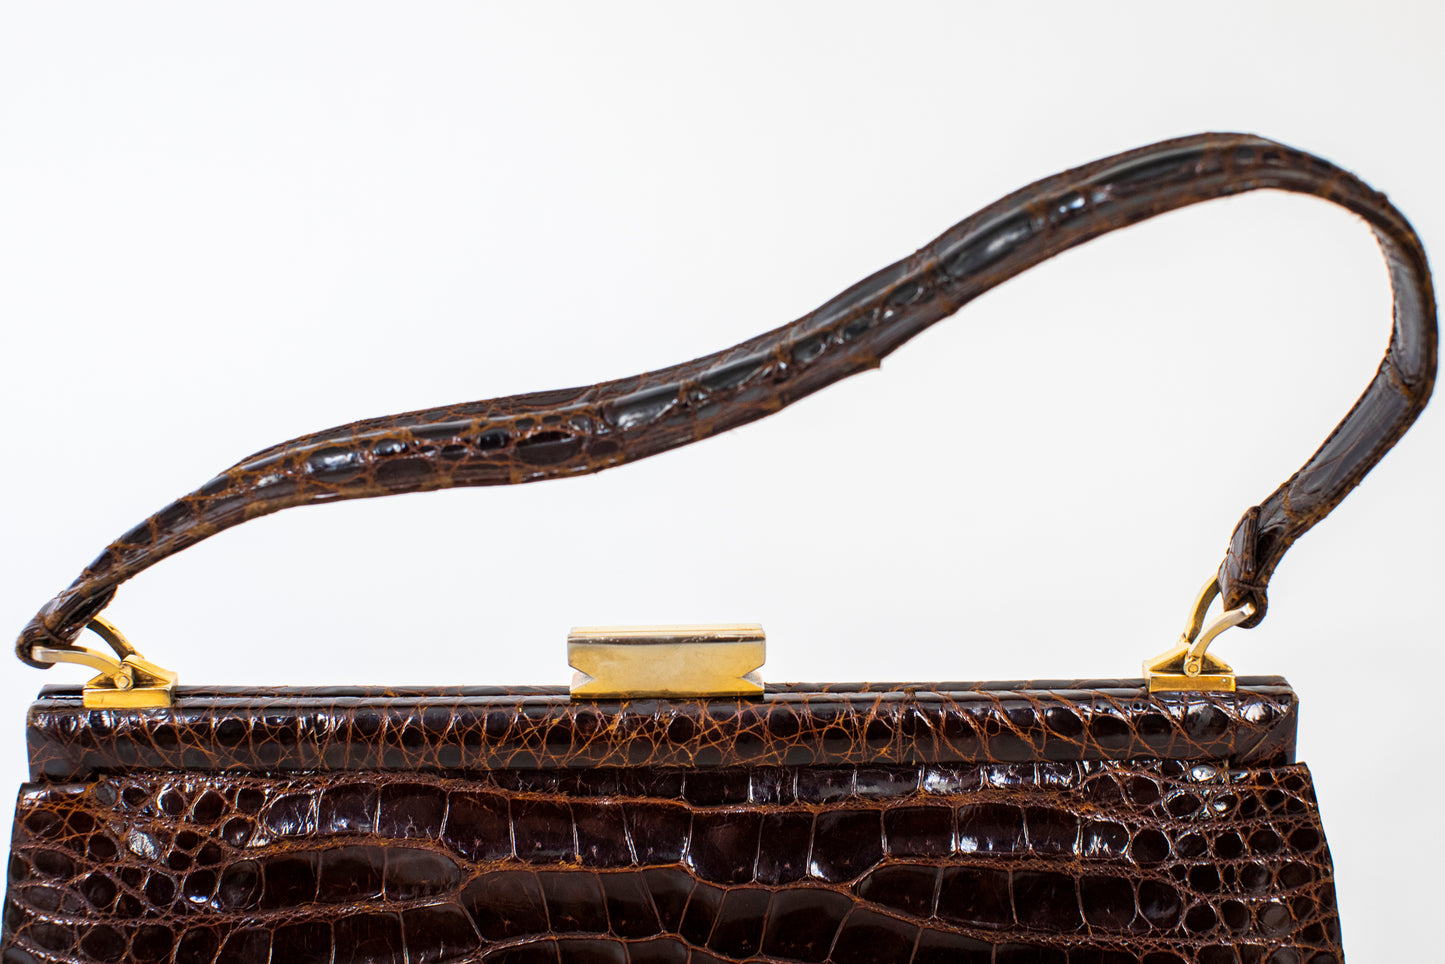 1970 Vintage Brown Crocodile Leather Handbag